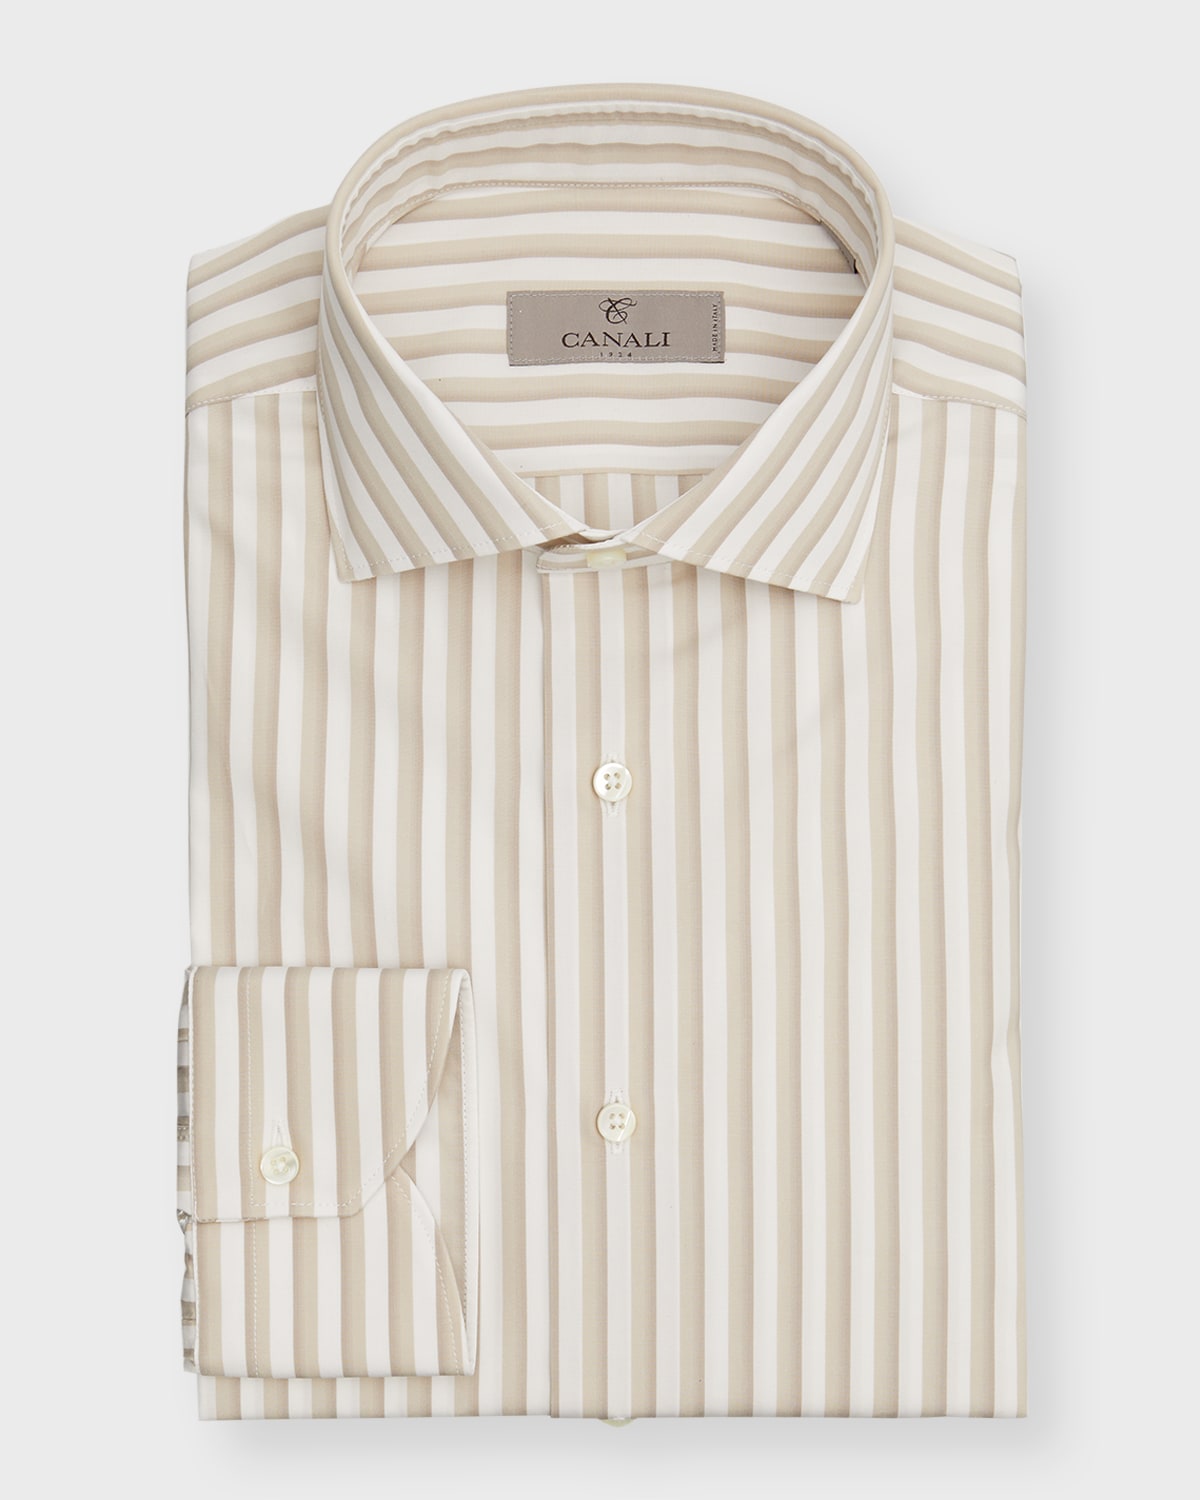 Canali Men's Ombre Stripe Cotton Dress Shirt In Tan